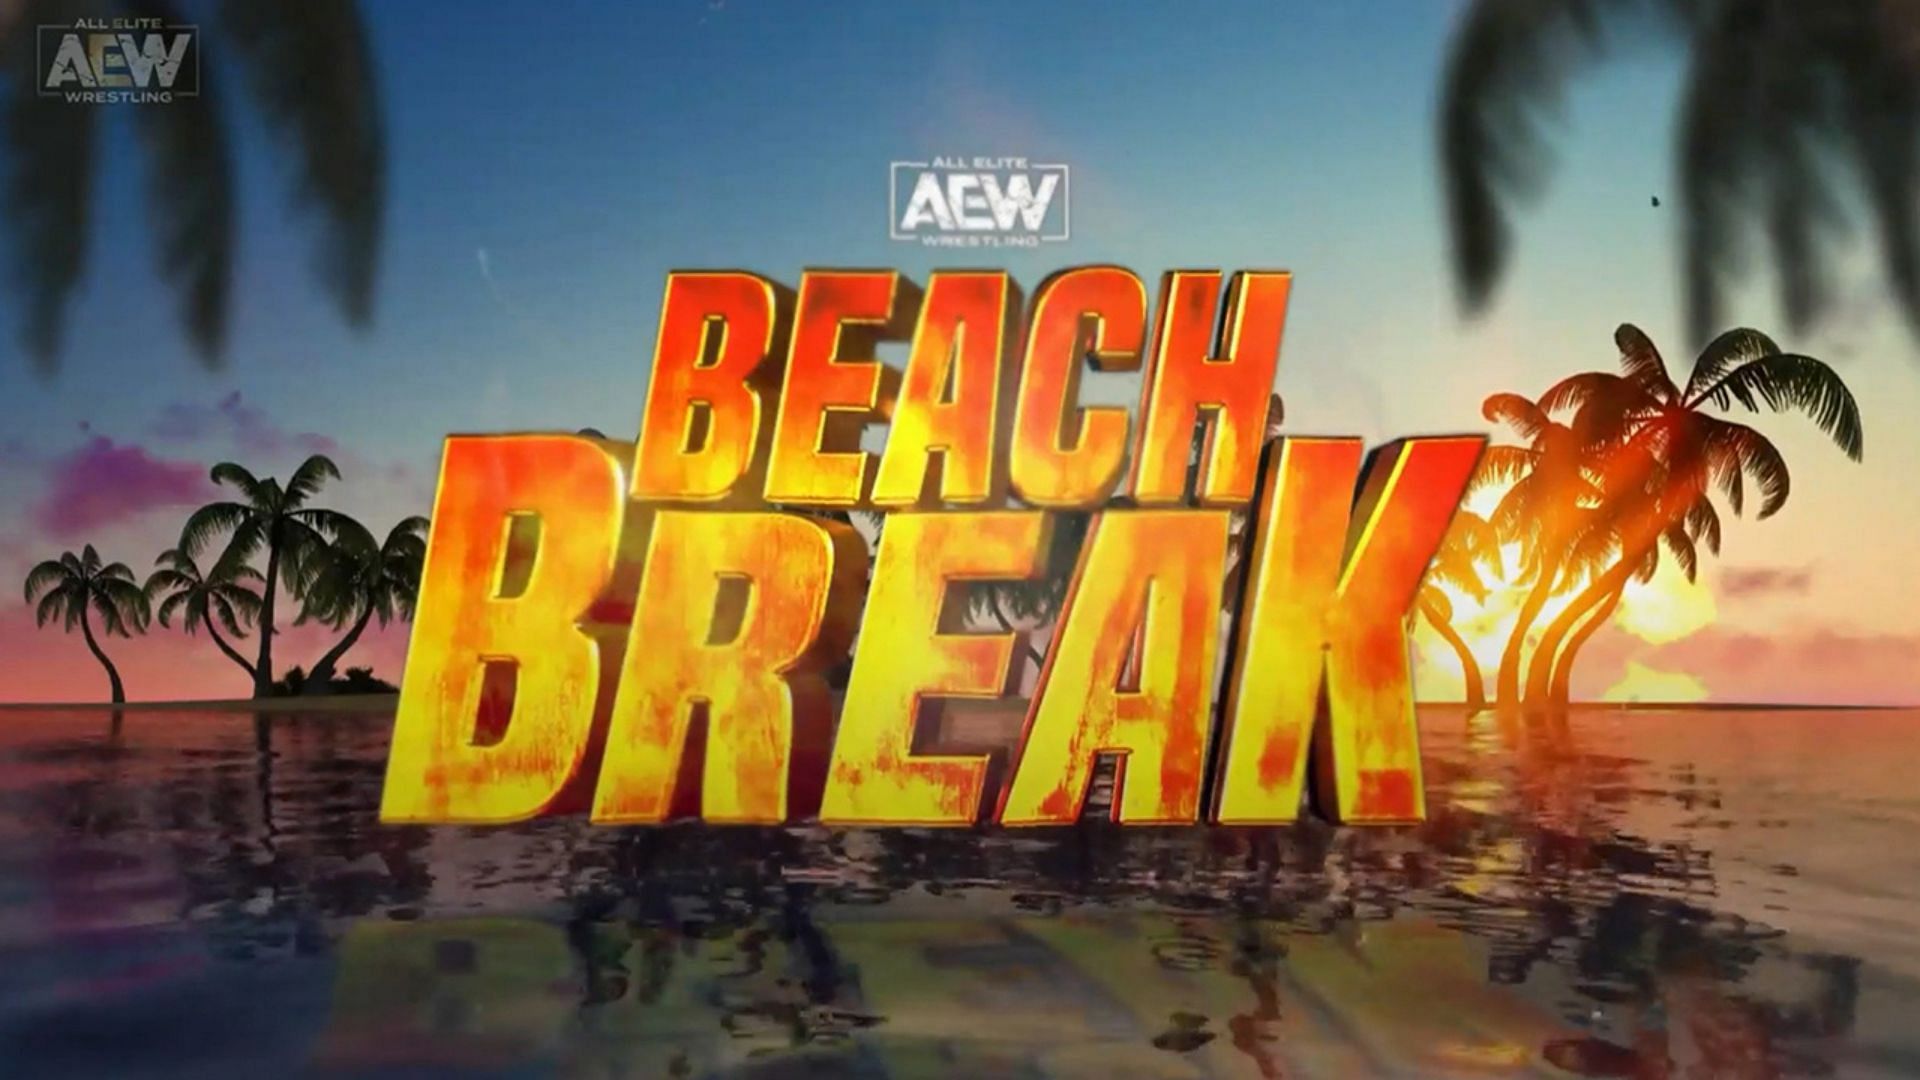 The AEW &quot;Beach Break&quot; logo